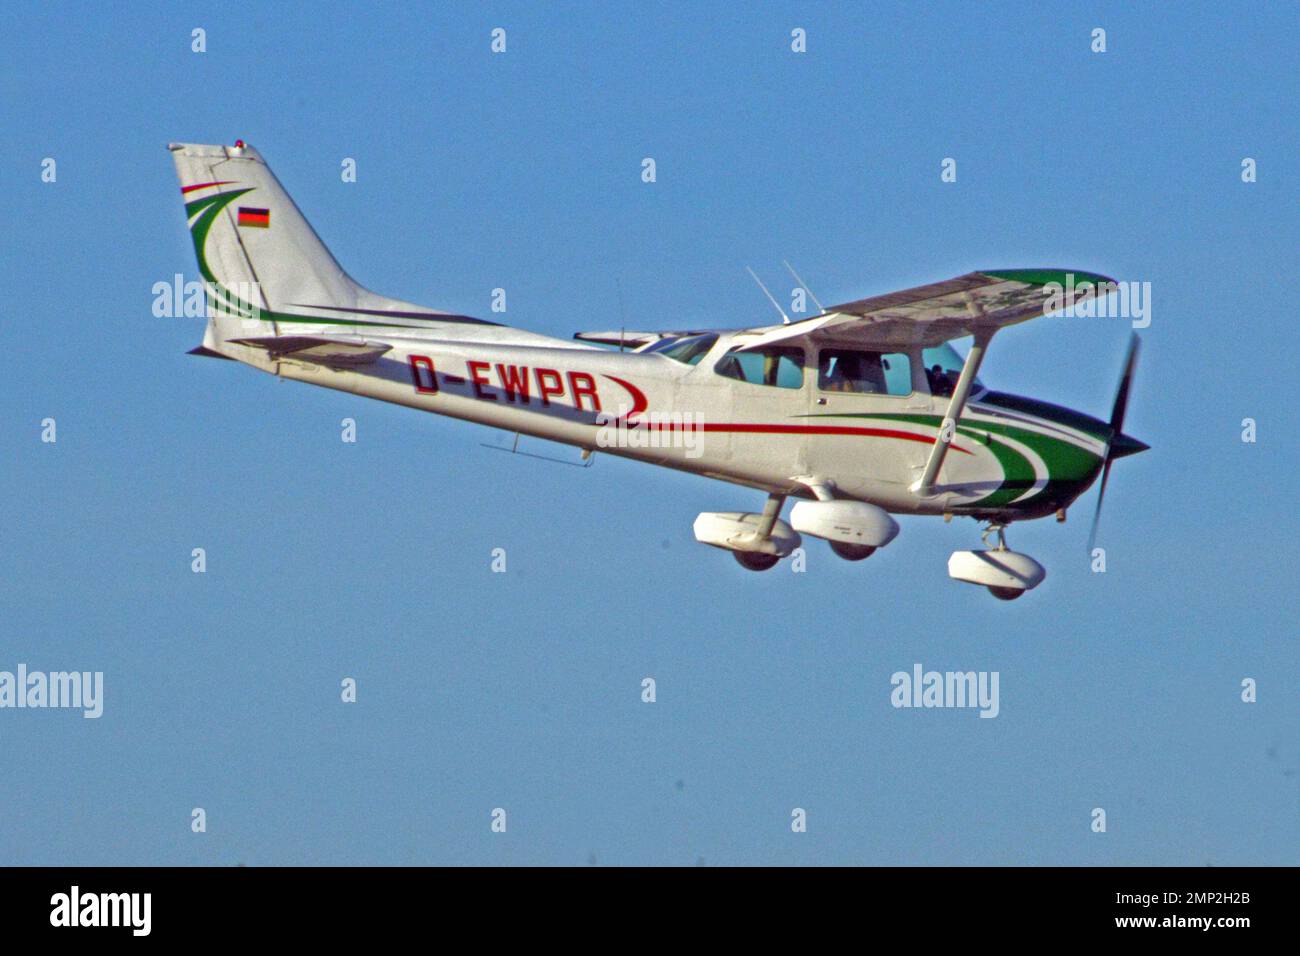 Germany, Bavaria, Oberschleissheim:   D-EWPR  Cessna 172N Skyhawk  (c/n 72032). Stock Photo